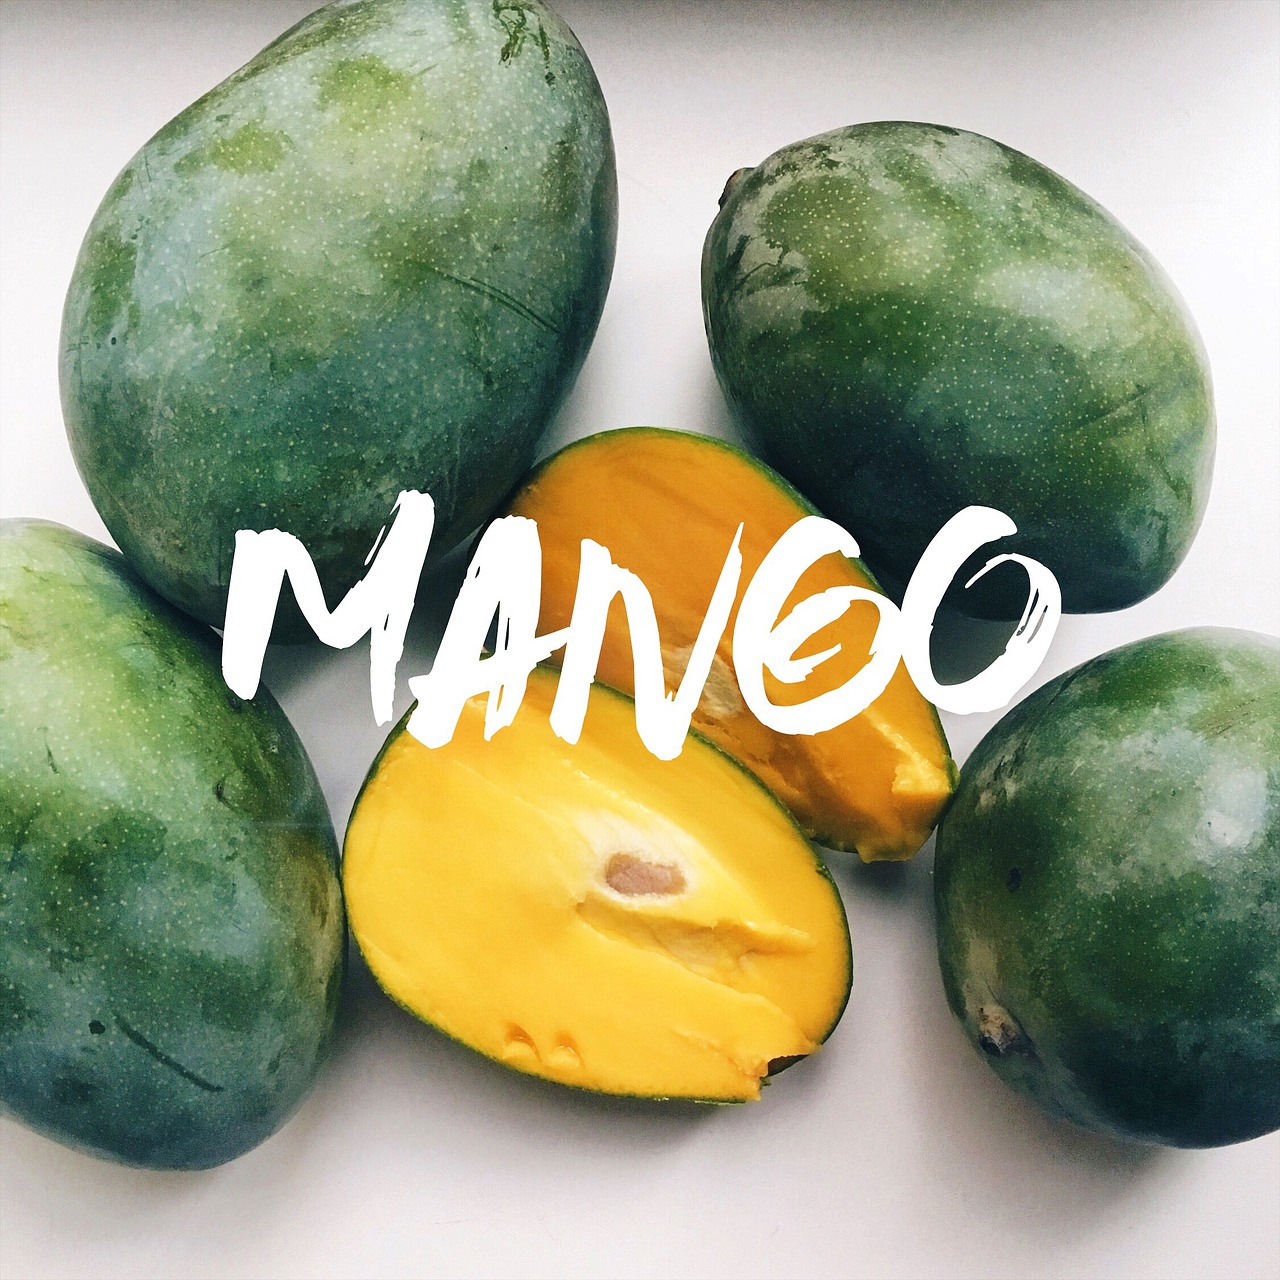 mango arkenstone juicy free photo